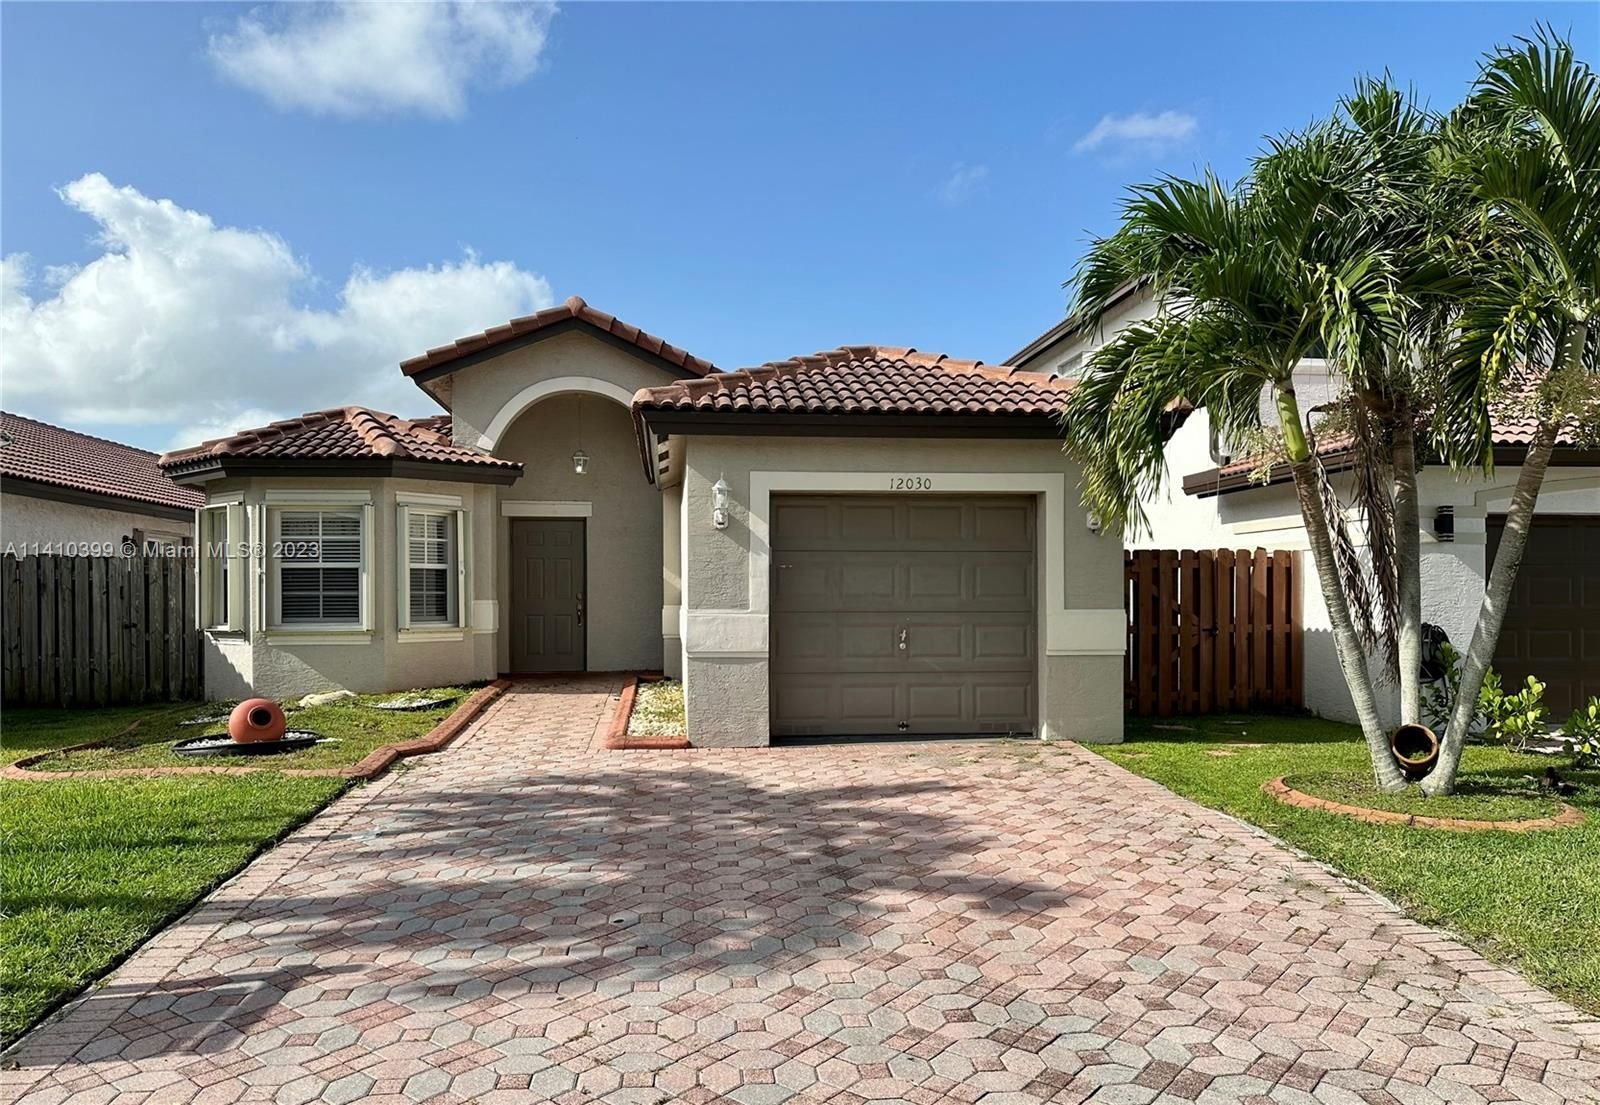 Real estate property located at 12030 135th Ter, Miami-Dade County, Miami, FL